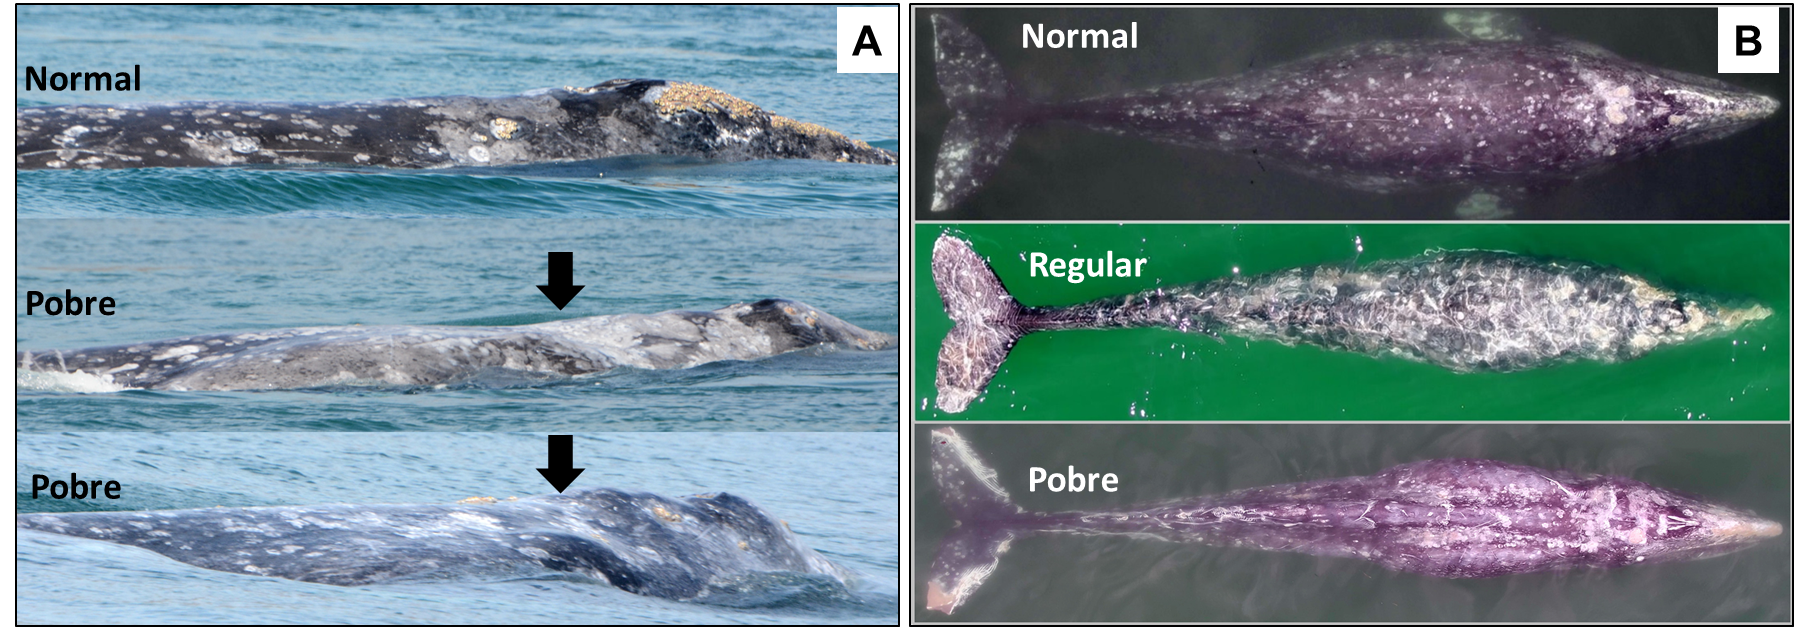 Aumentó la proporcion de ballenas grises lactantes en condición regular